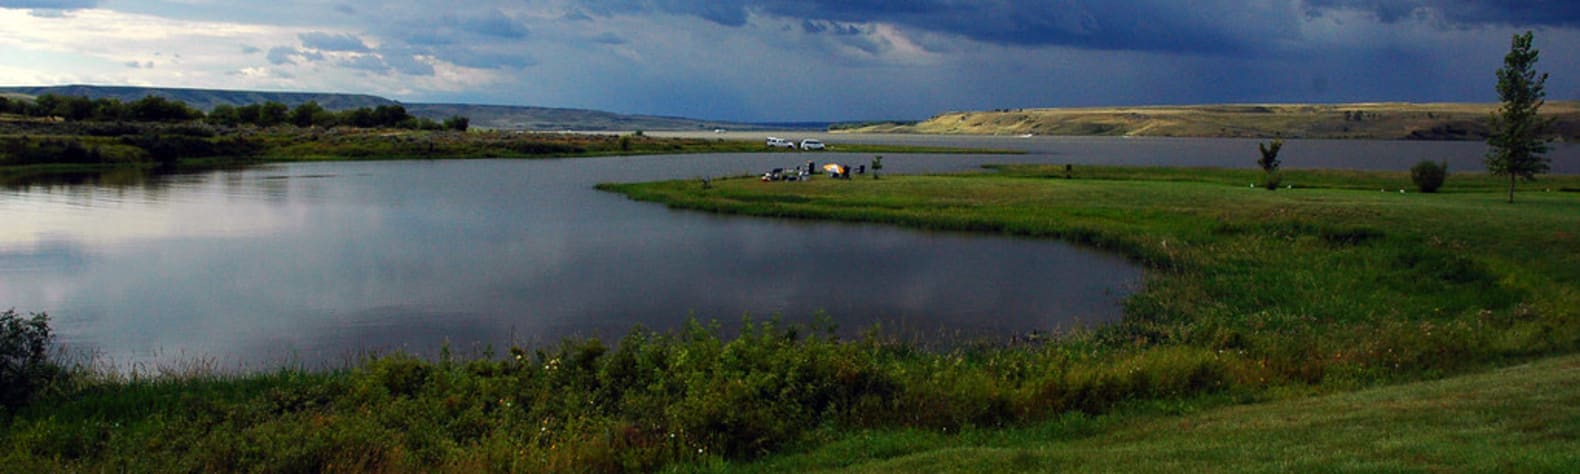 Saskatchewan Landing Provincial Park